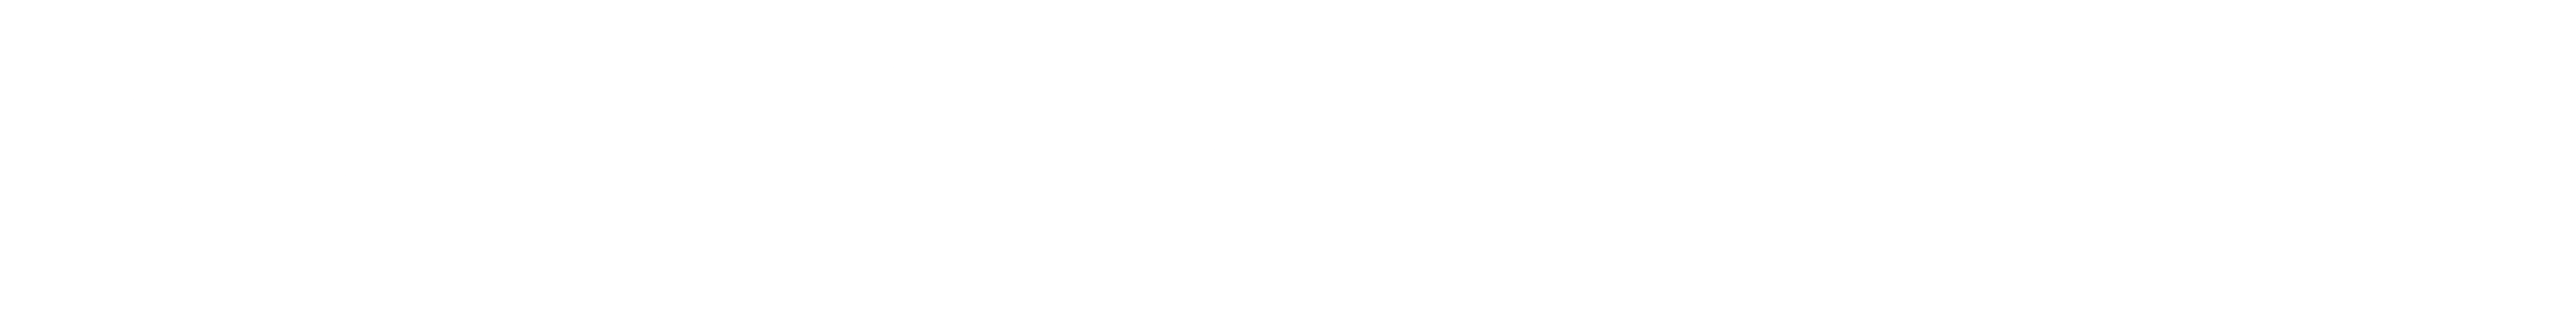 sprkr logo